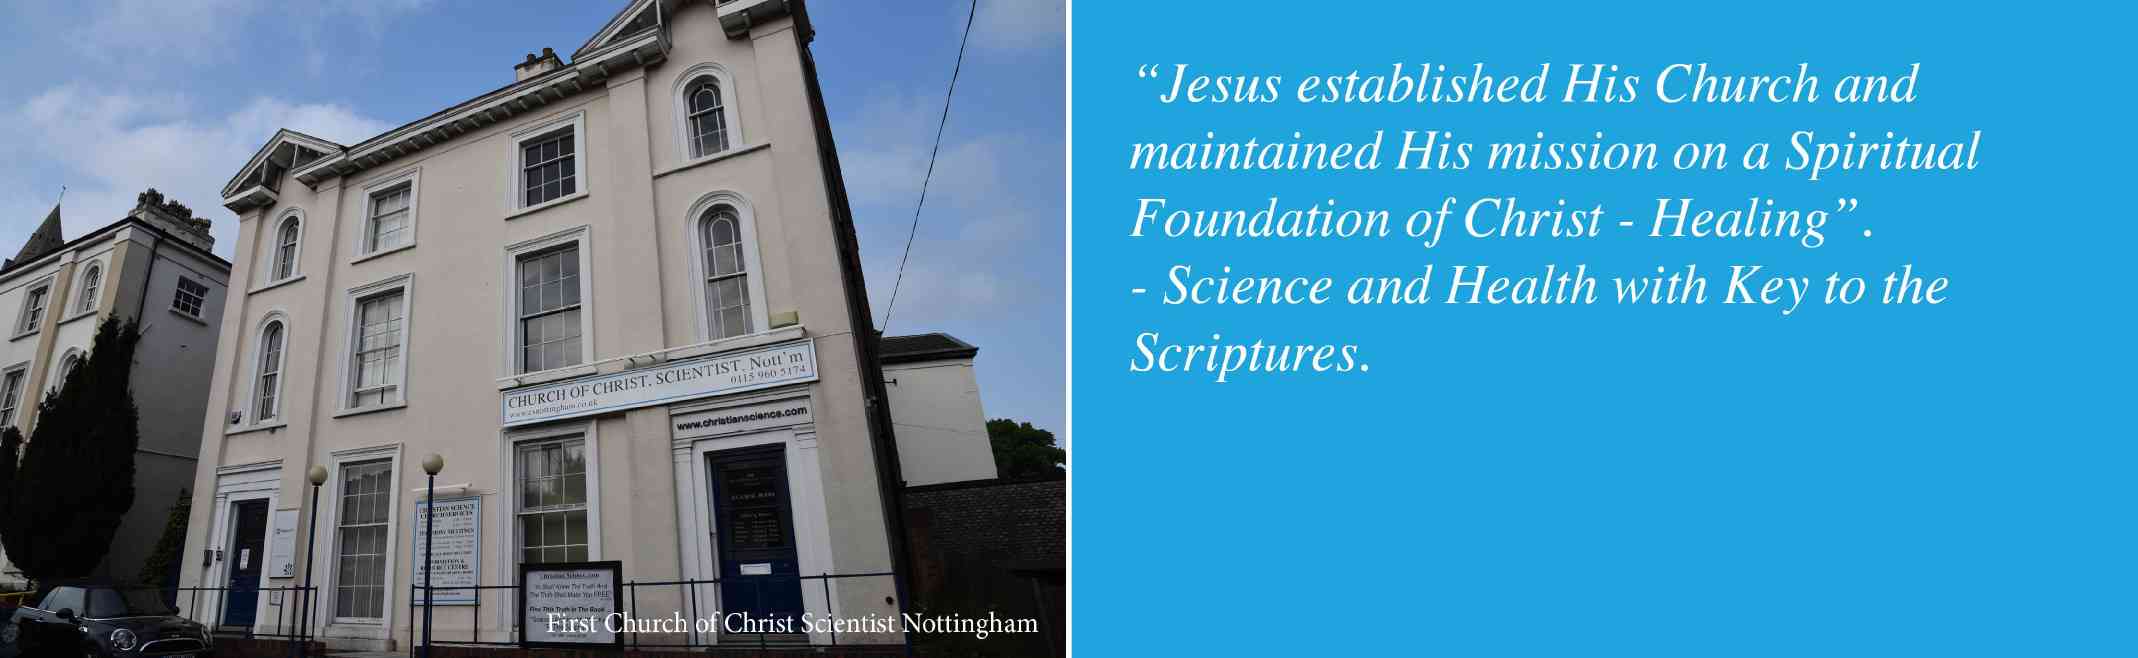 CHRISTIAN SCIENCE CHURCH NOTTINGHAM